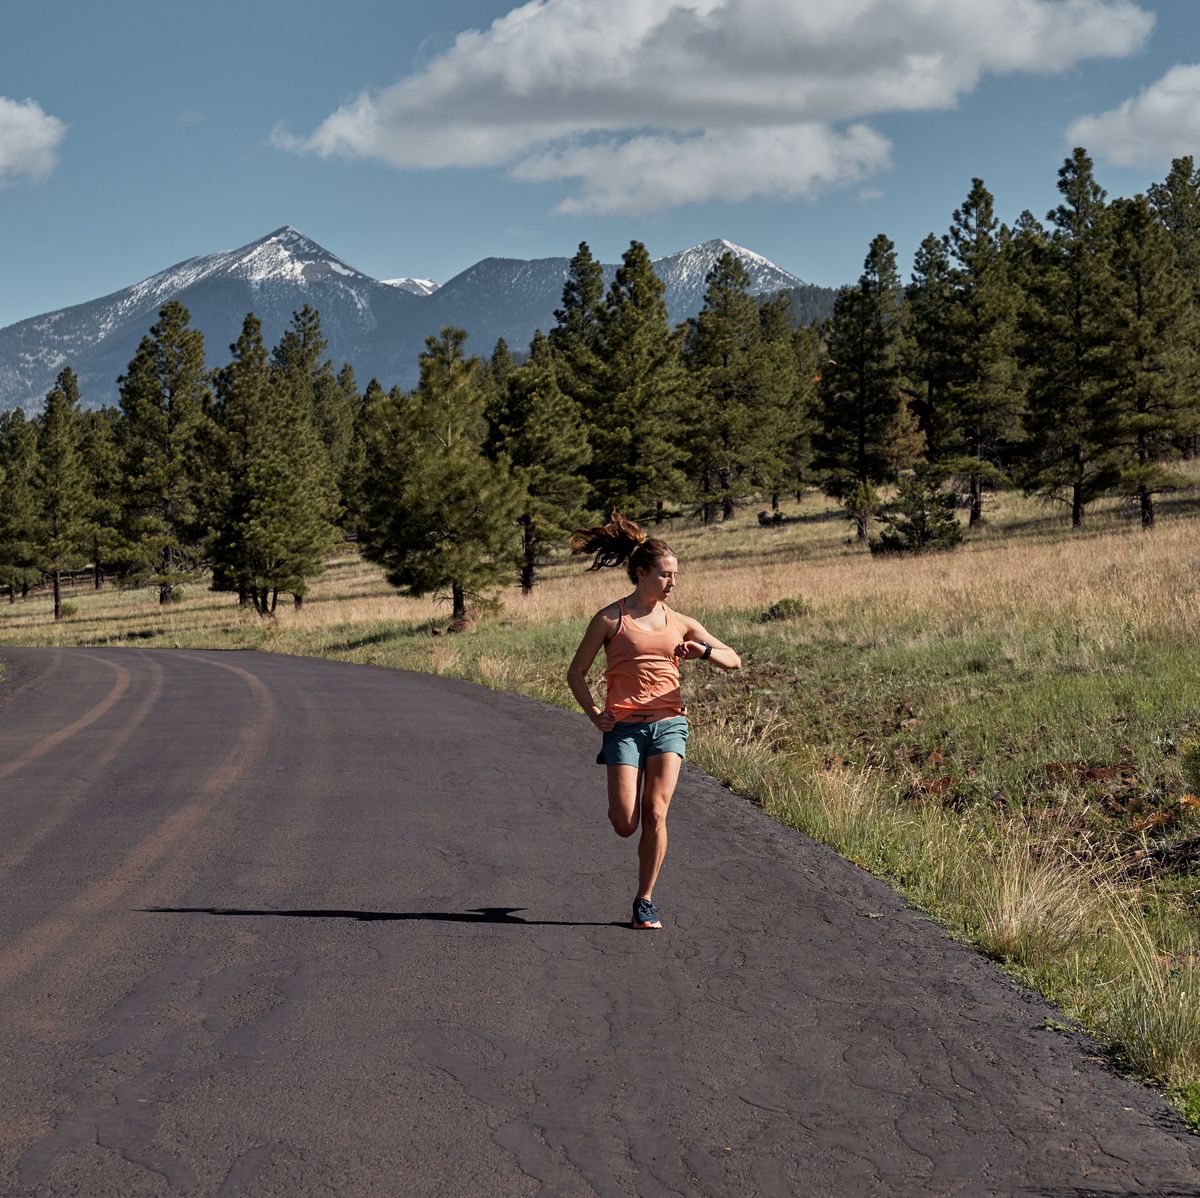 Hone Your Marathon Speed Endurance with Speed-First Training